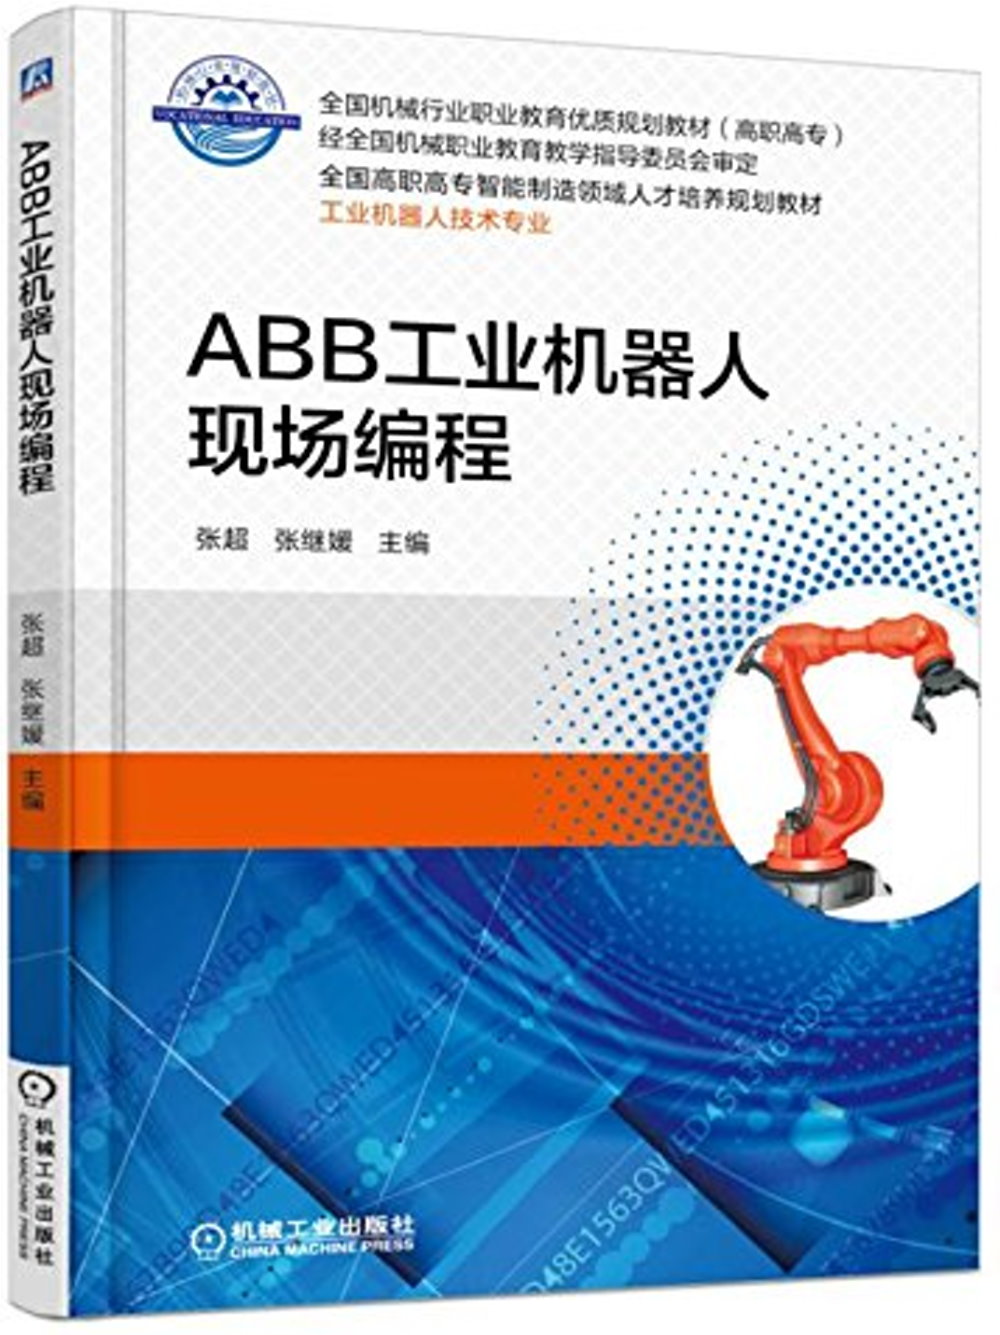 ABB工業機器人現場編程